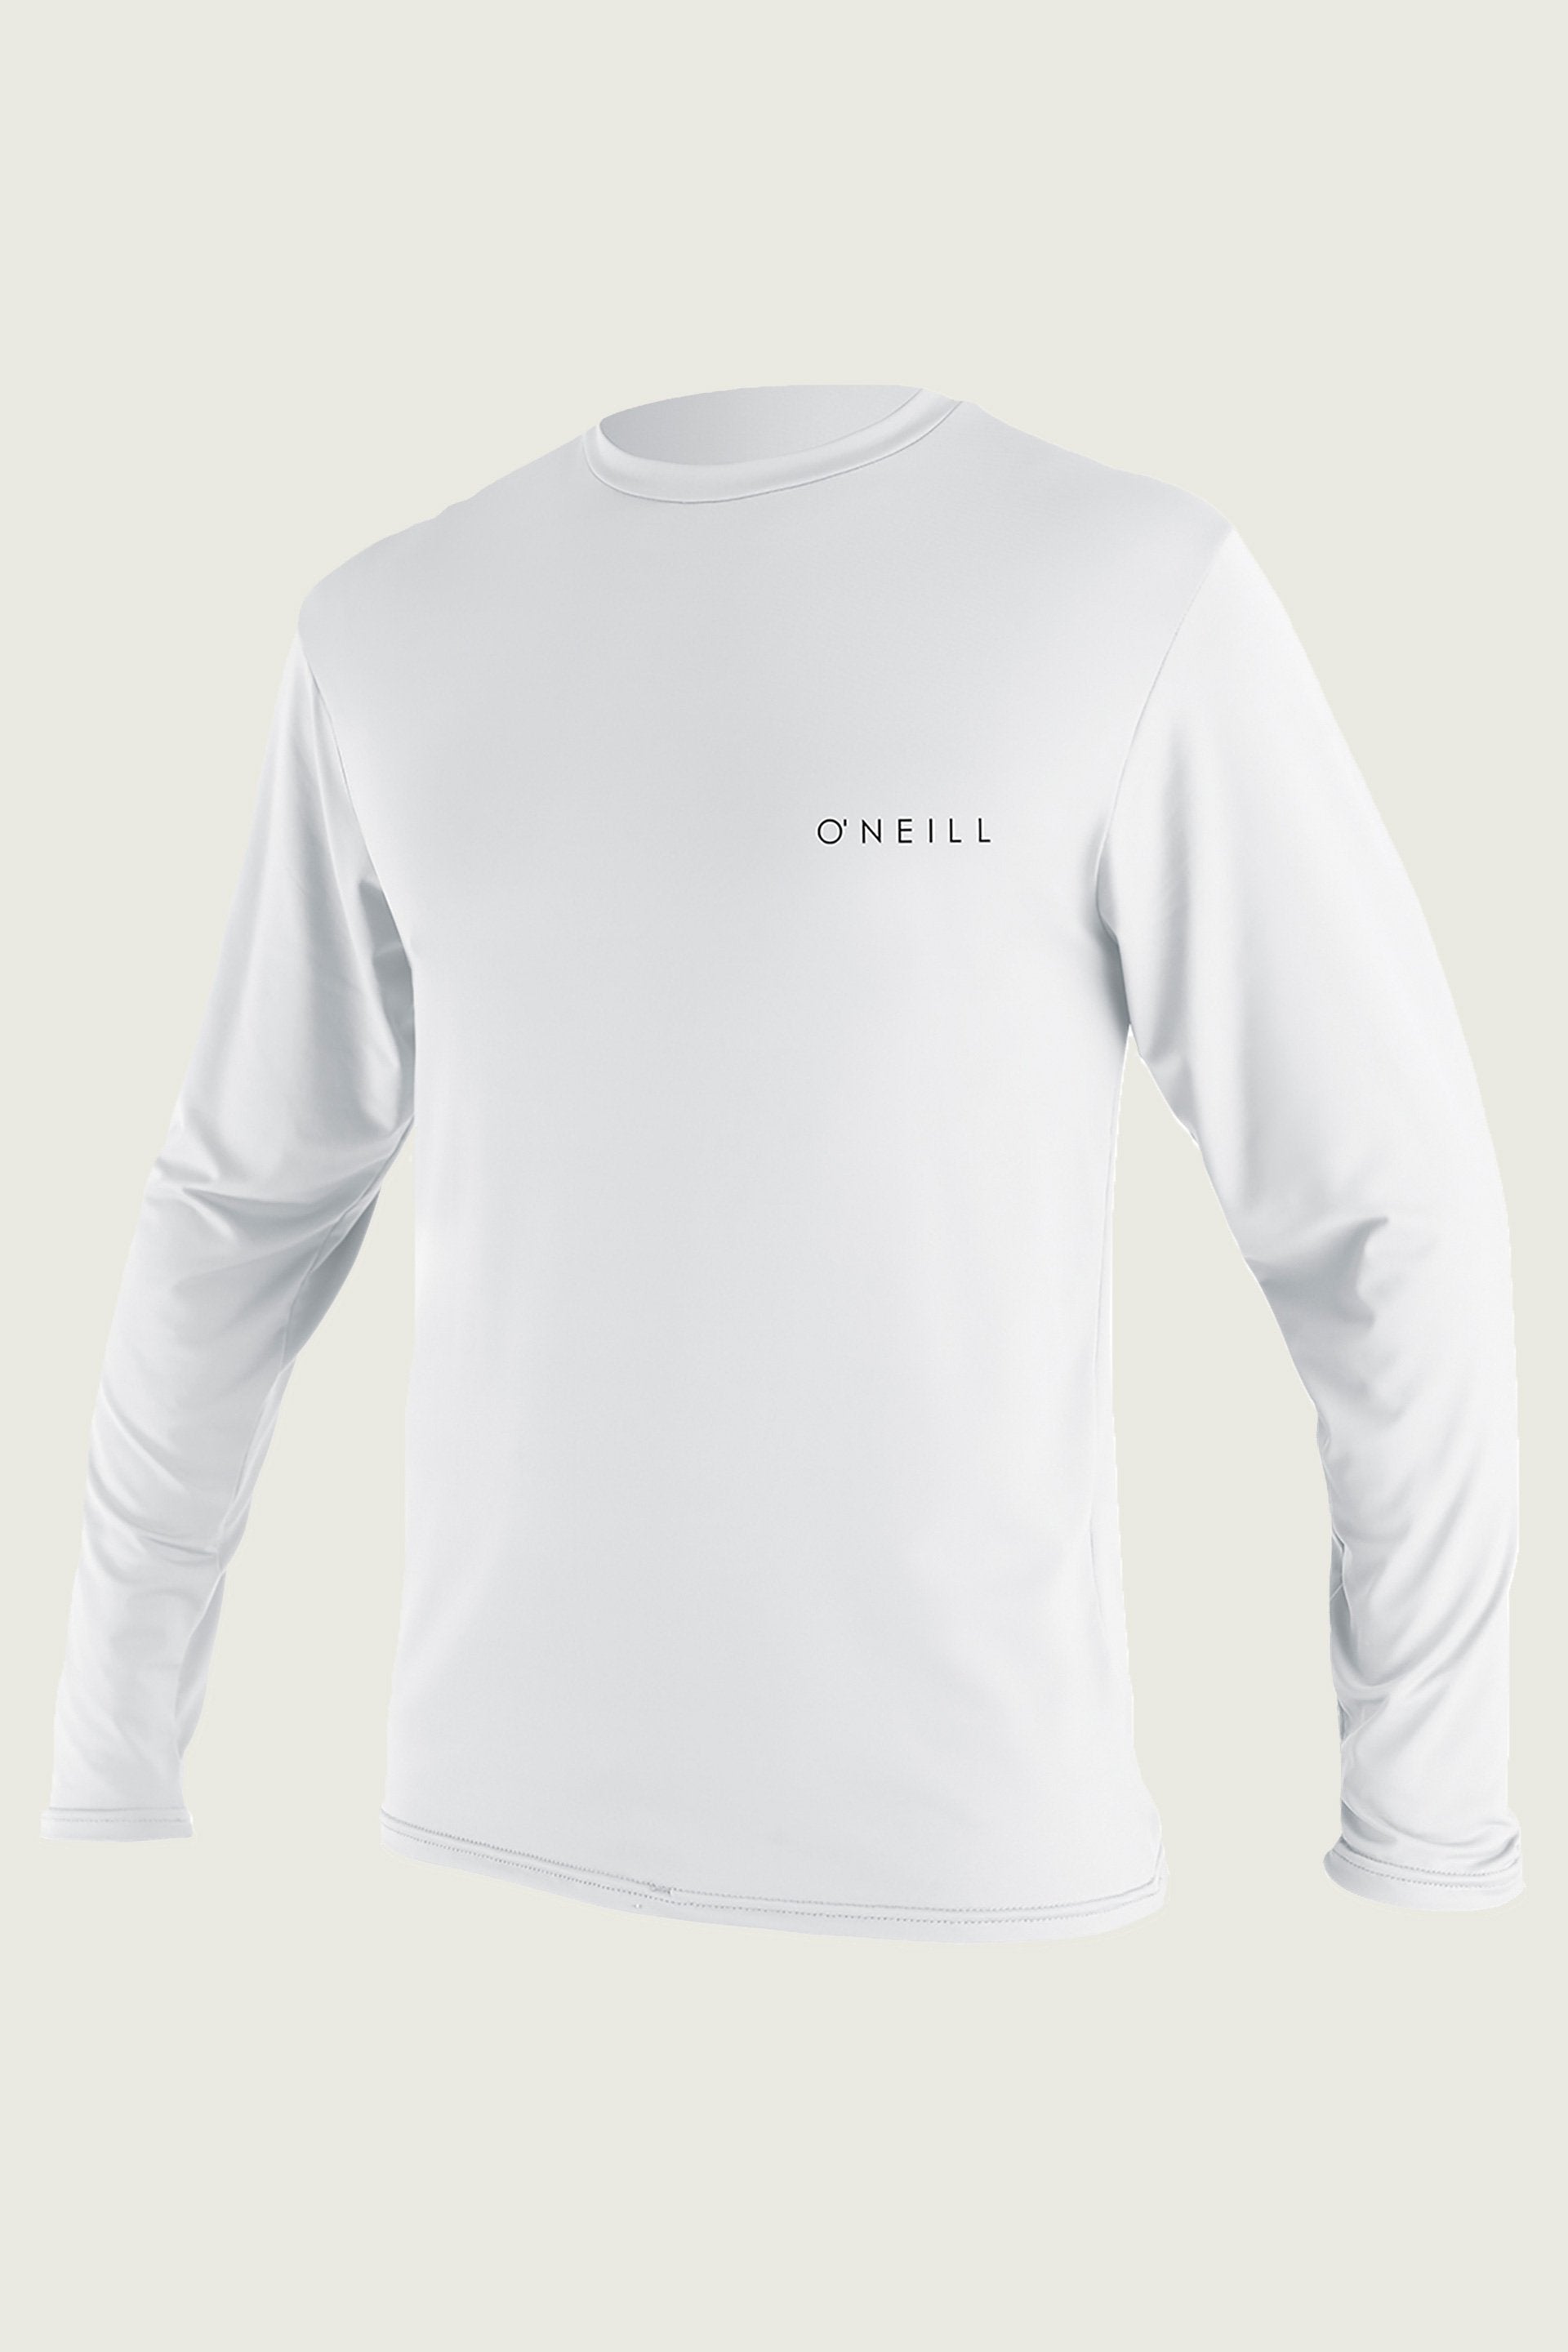 O'Neill Basic Skins 30+ Sun Long-Sleeve Shirt - Men's White, XL